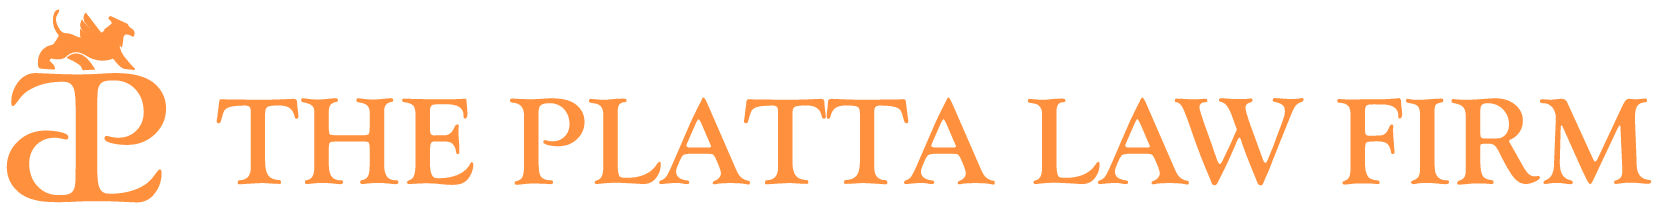 Website logo - The Platta Law Firm